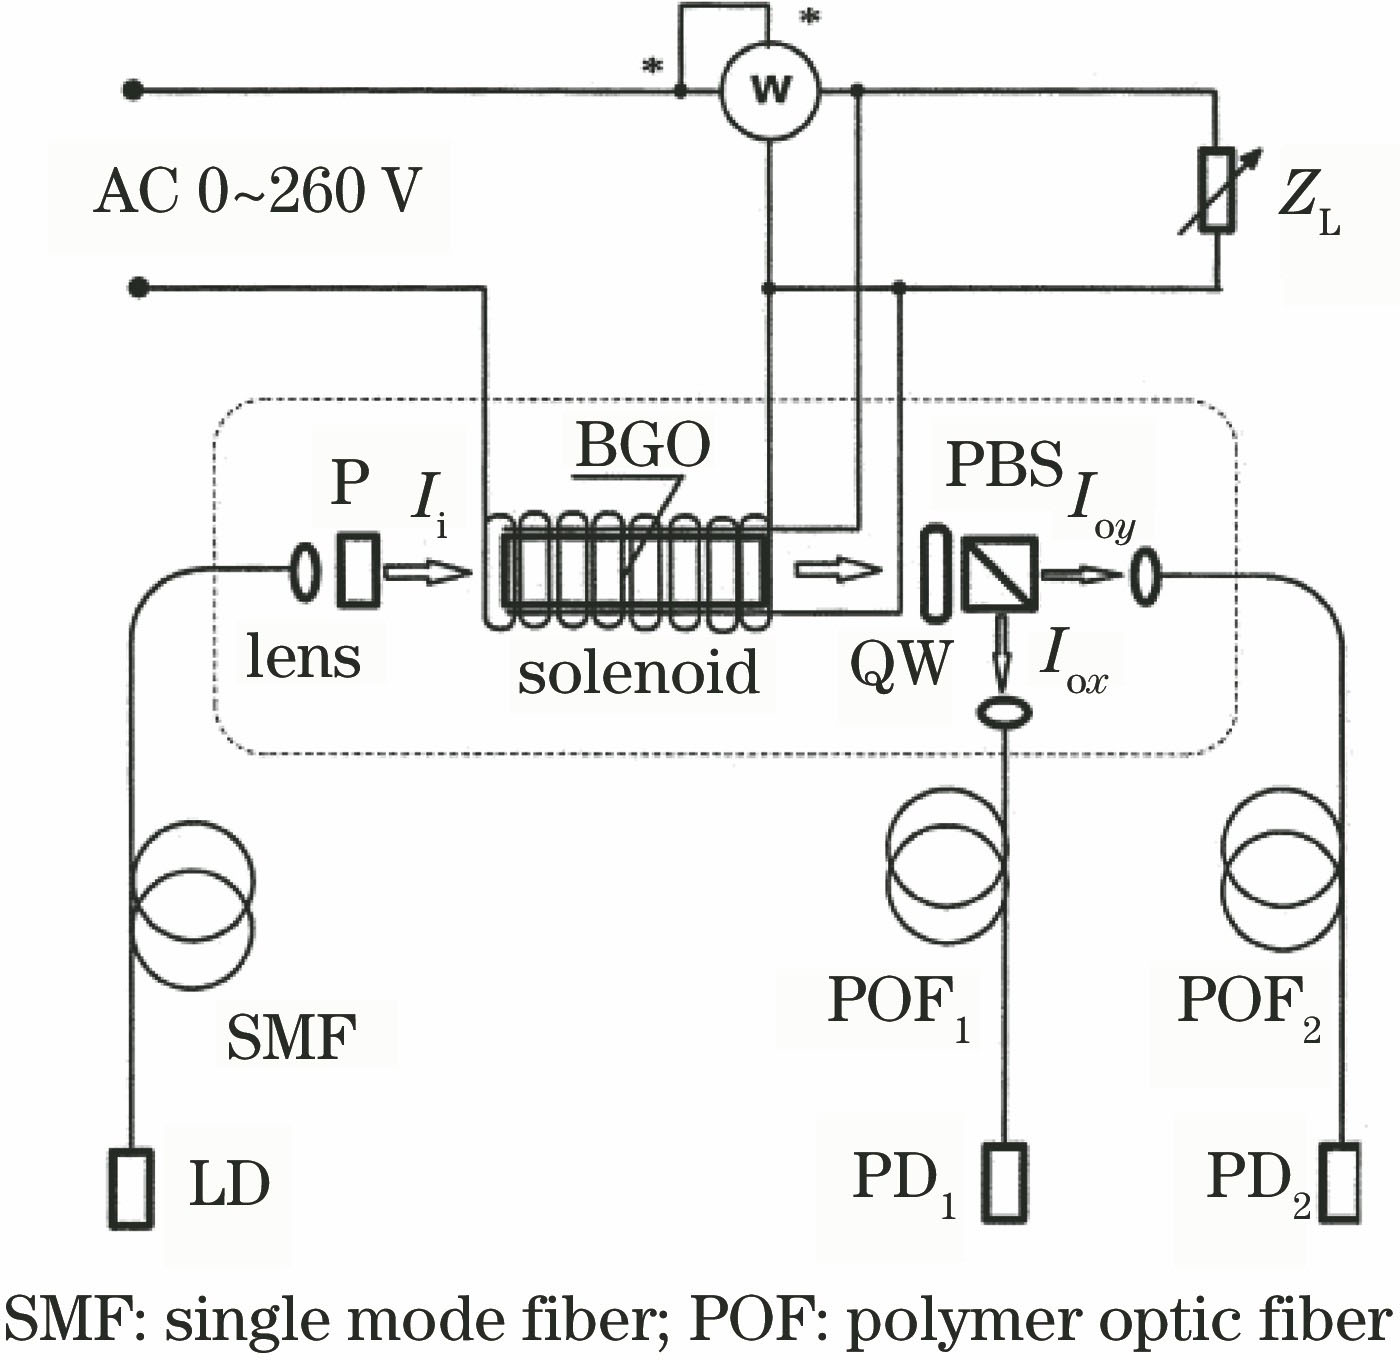 Experimental setup of the optical electric-power sensor based on bismuth germanate crystal[25]